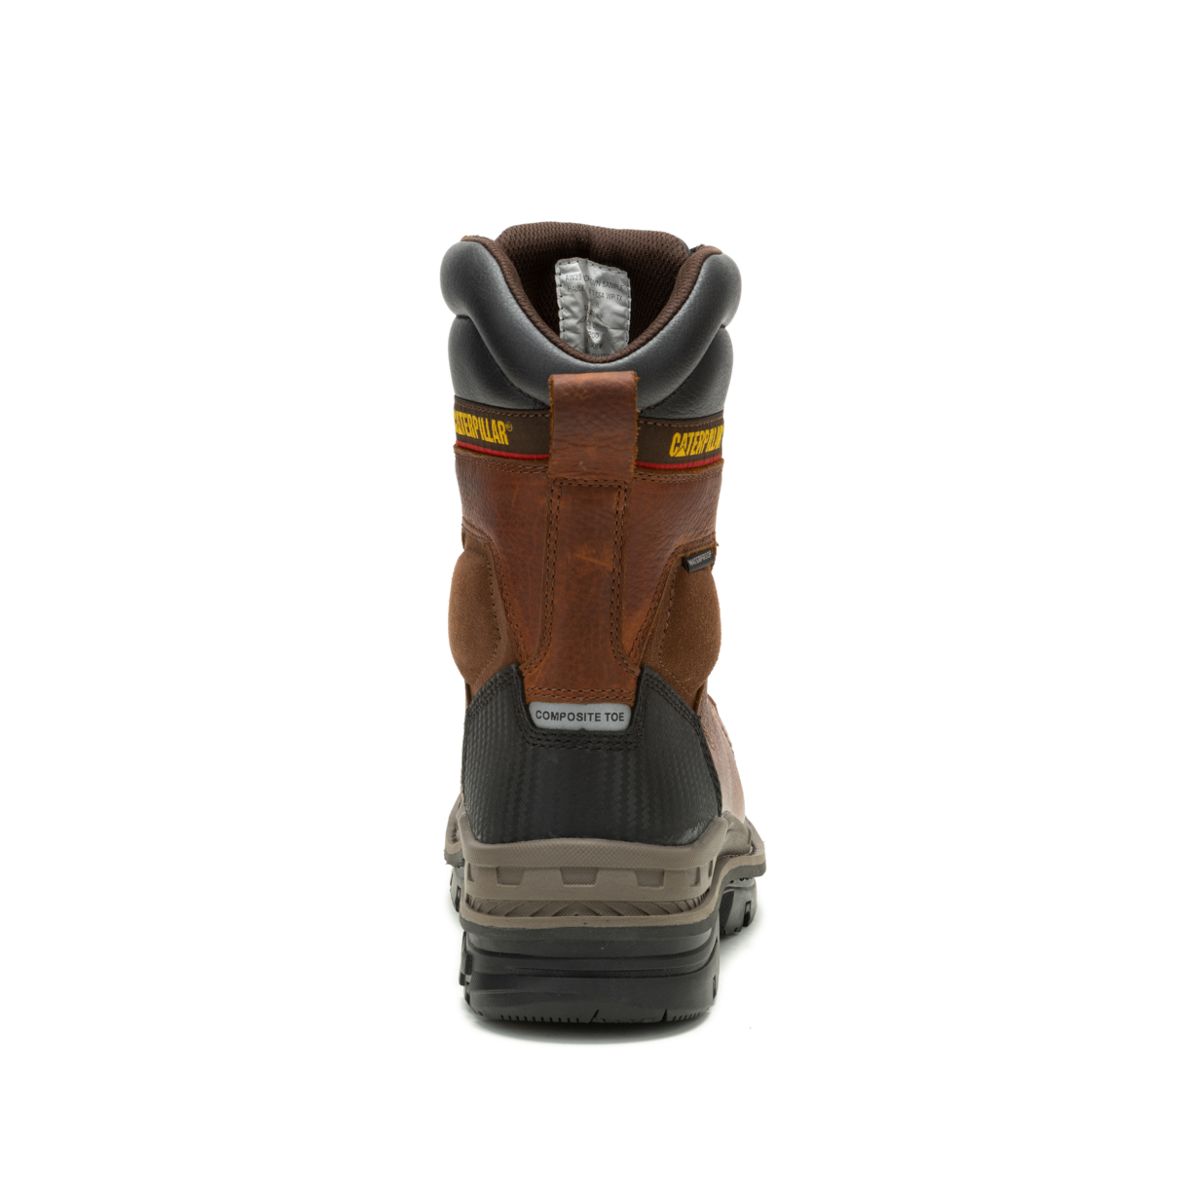 Hauler XL 8" Composite Toe Waterproof TX CSA Work Boot, Leather Brown, dynamic 5